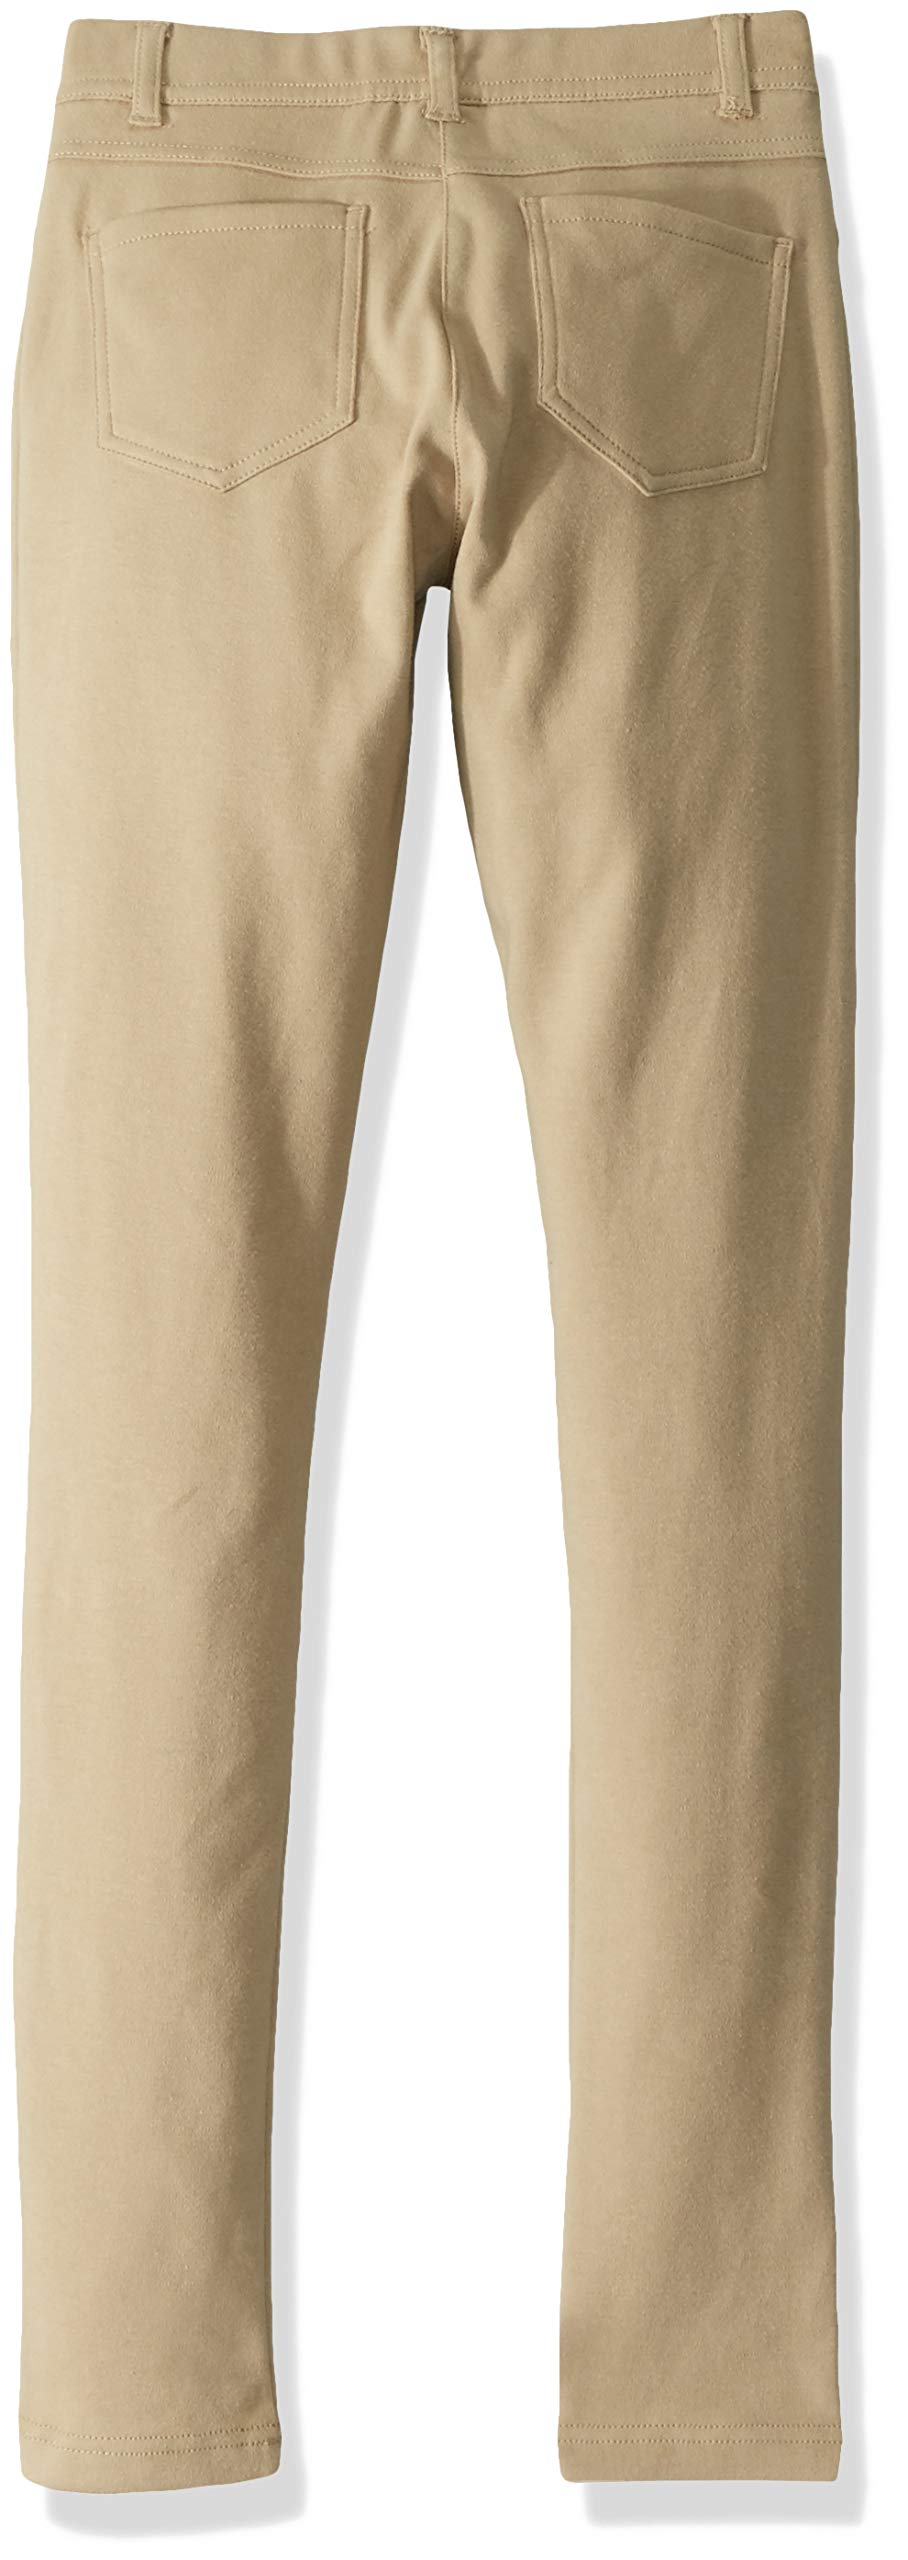 Nautica Women's Juniors School Uniform Skinny Leg Jegging, Flat Front Style with Zipper Closure, Functional Pockets